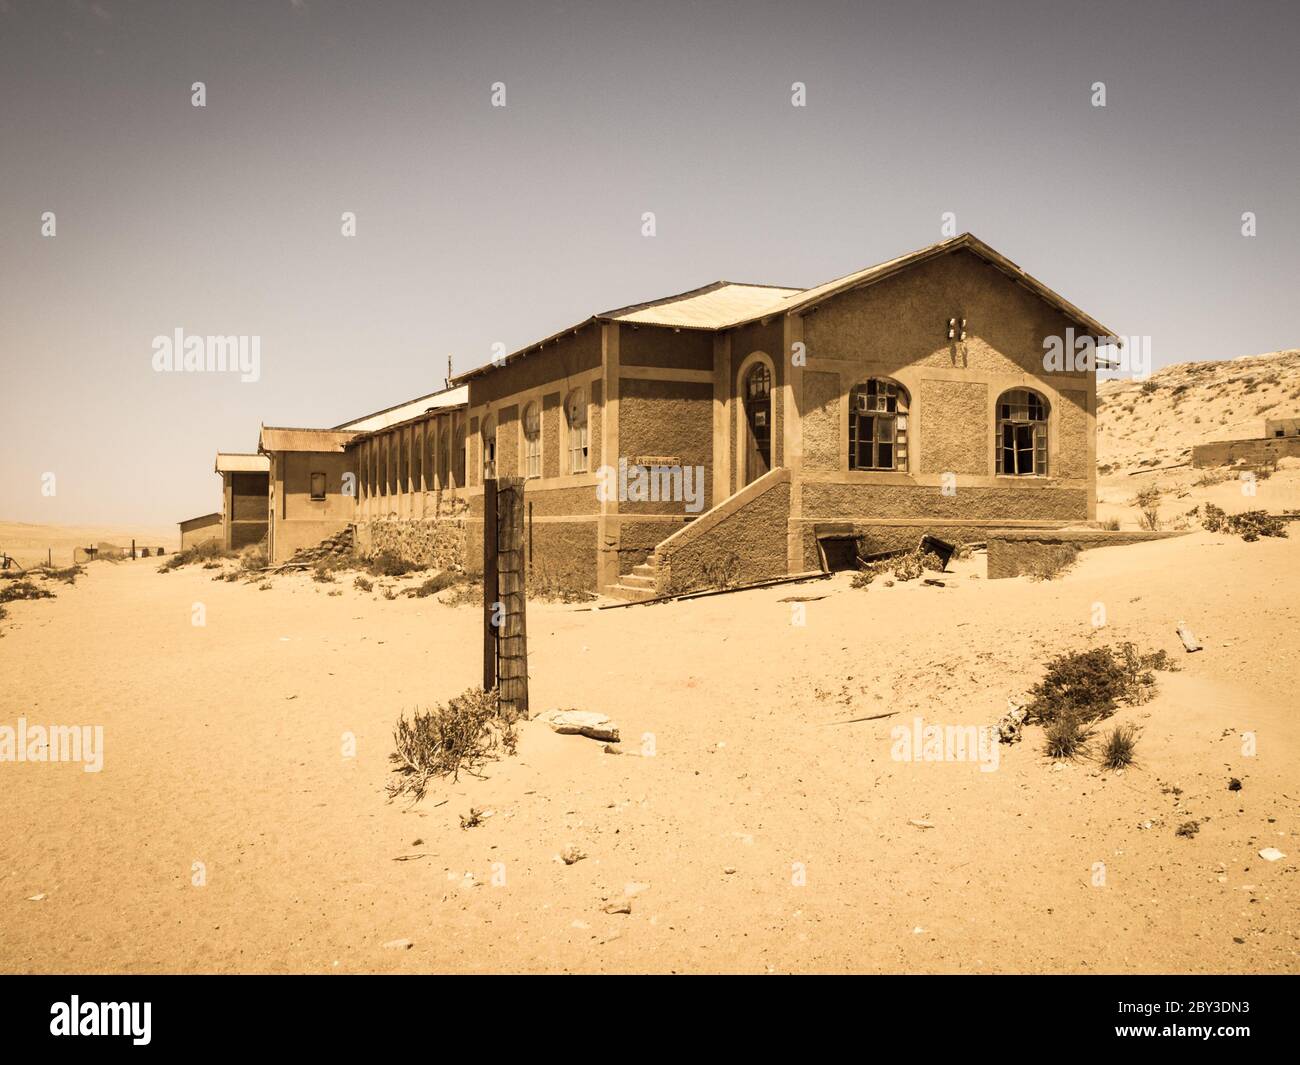 Ghost buildings of old diamond mining town Kolmanskop near Luderitz in Namibia. Abandoned house ruins sunken in the sand dunes of Namib Desert. Vintage toning photography. Stock Photo